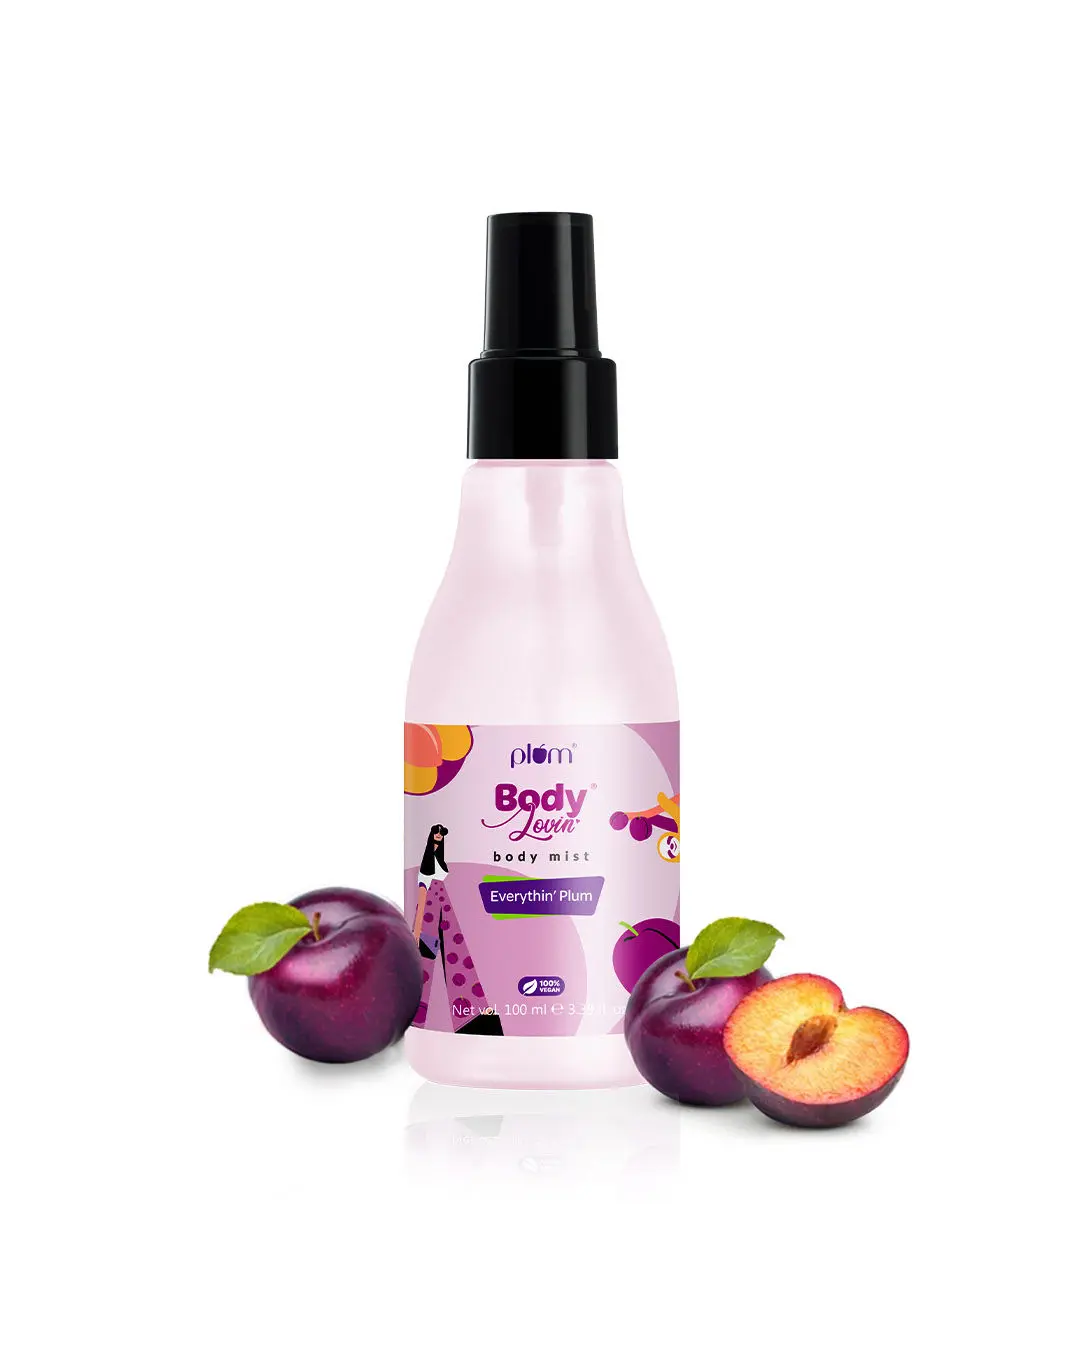 Plum BodyLovin' Everythin' Plum Body Mist (100 ml) | Fruity Fragrance | Perfume Body Spray